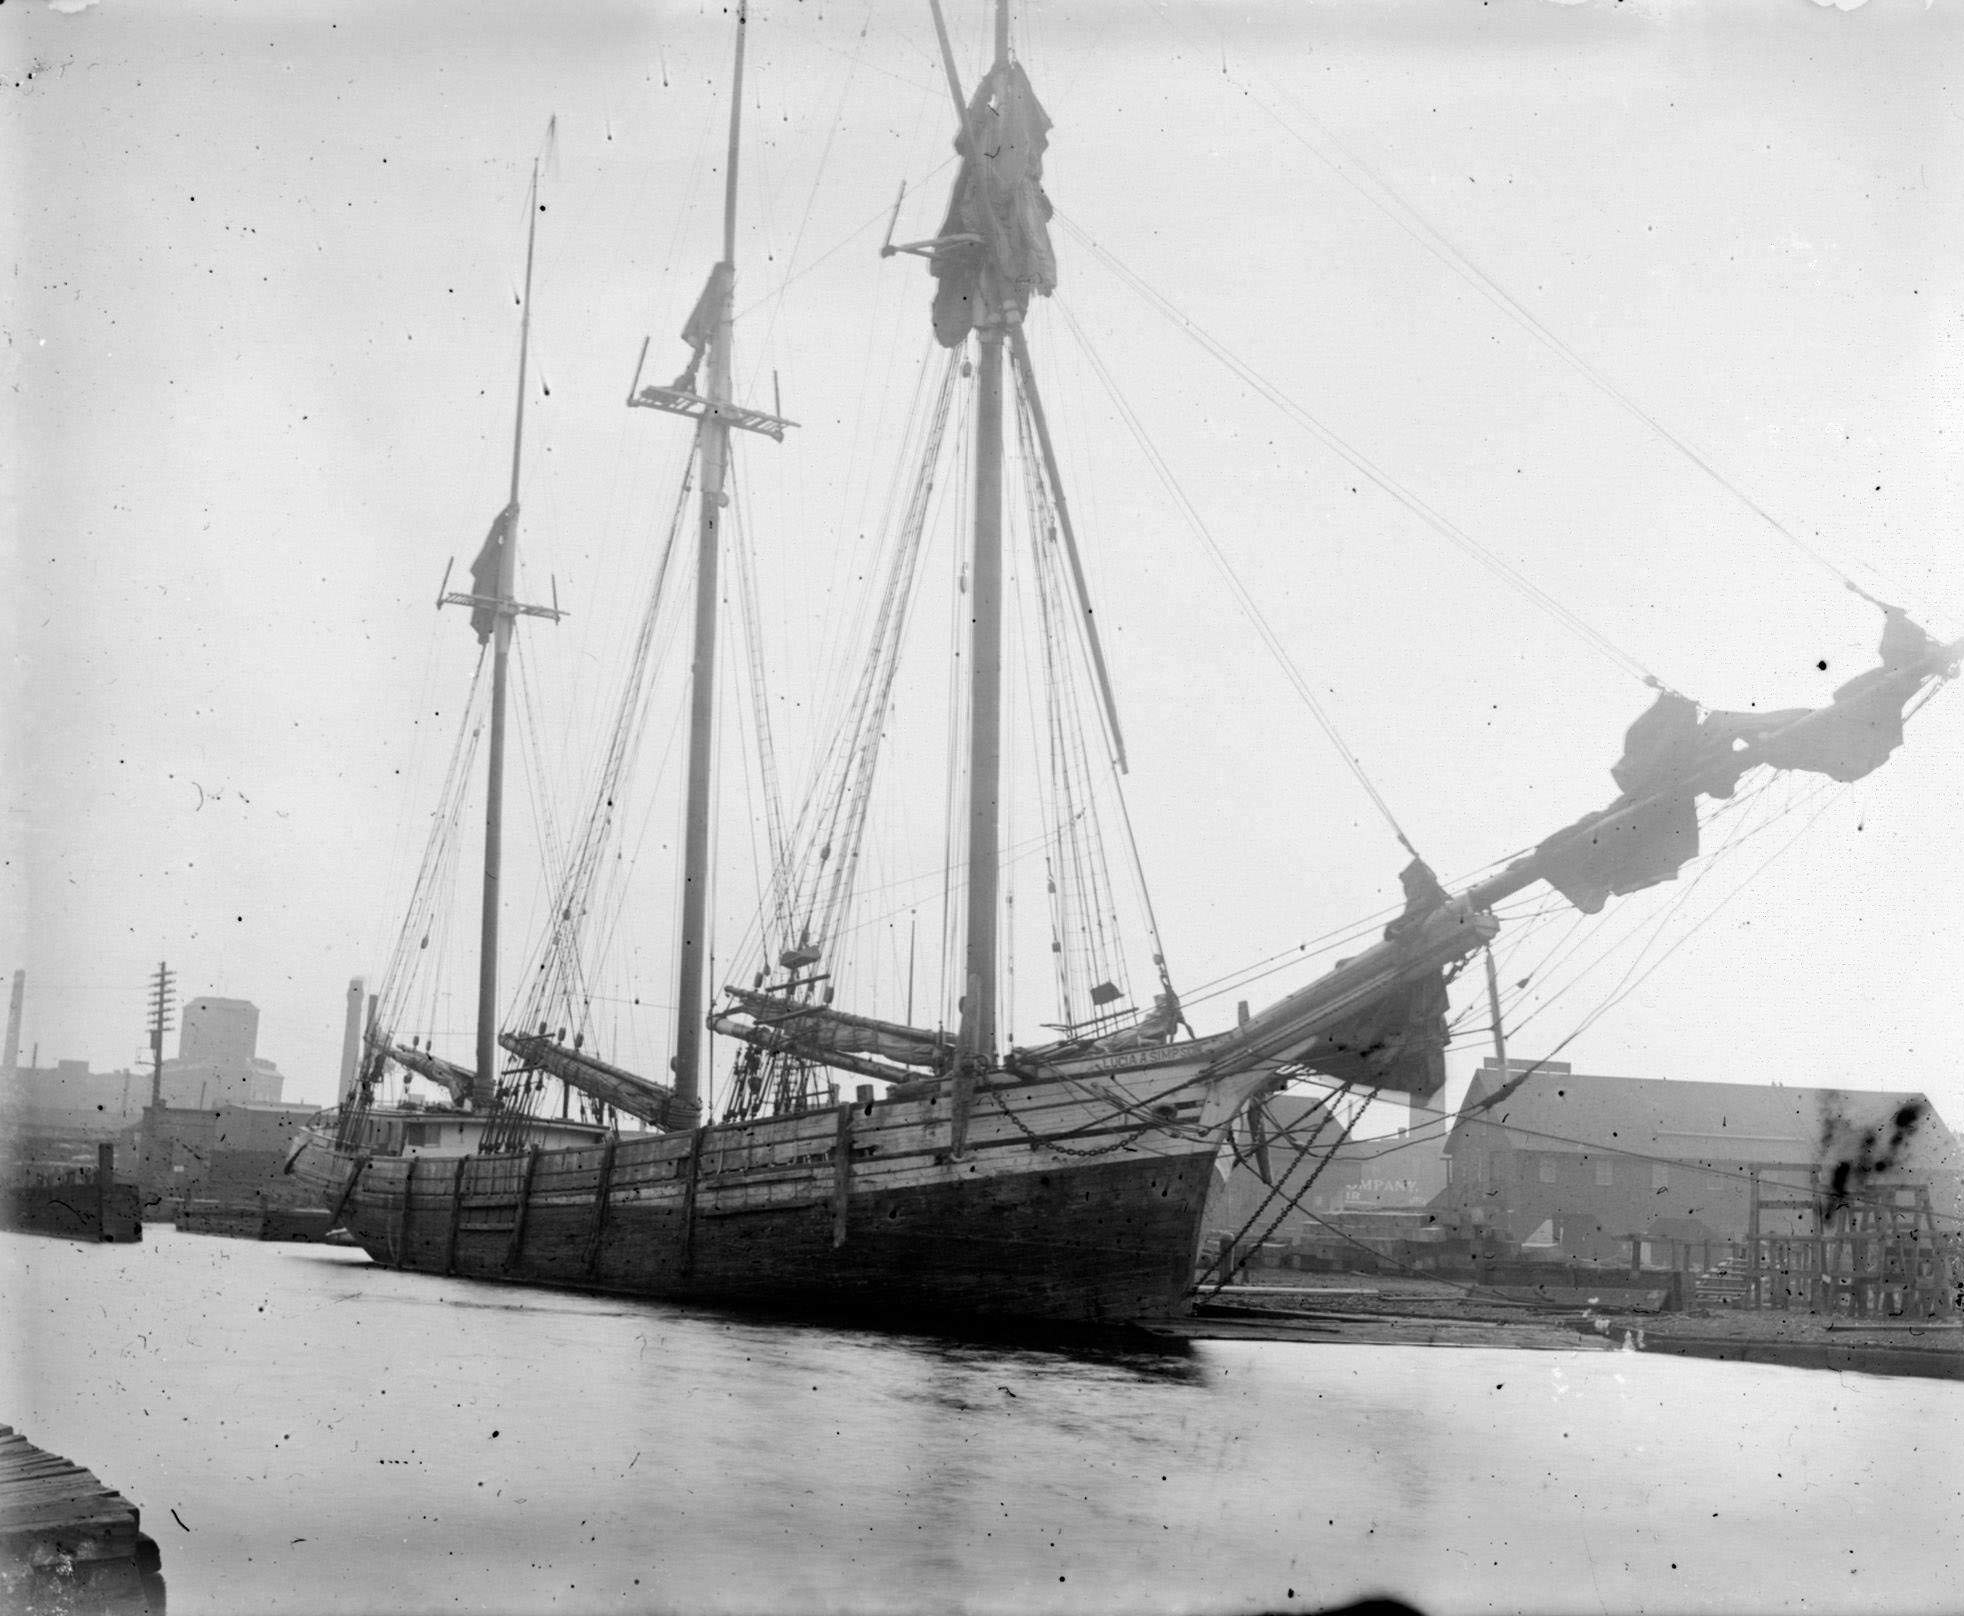 A large sailing ship docked in Milwaukee Harbor, Milwaukee, Wisconsin, 1898.